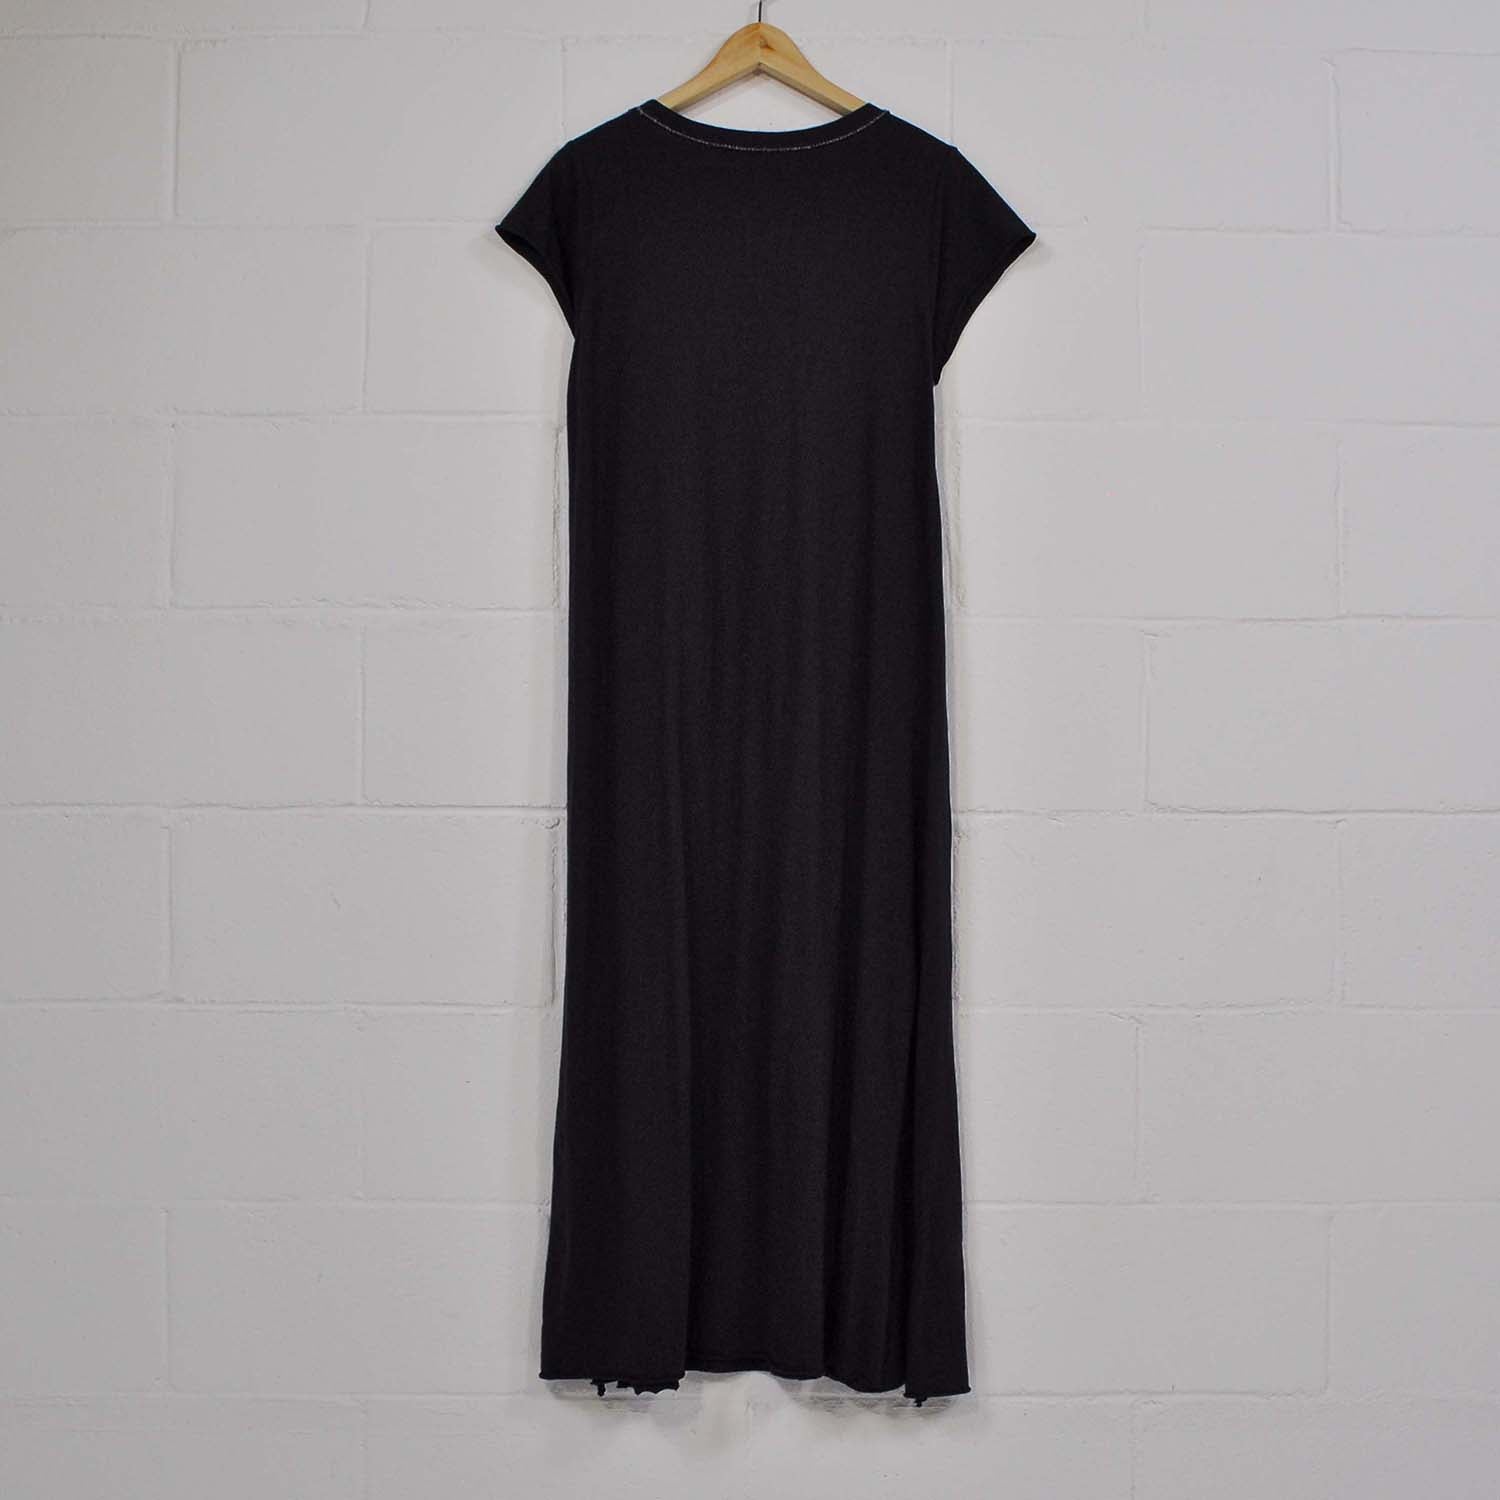 Shiny neckline black dress